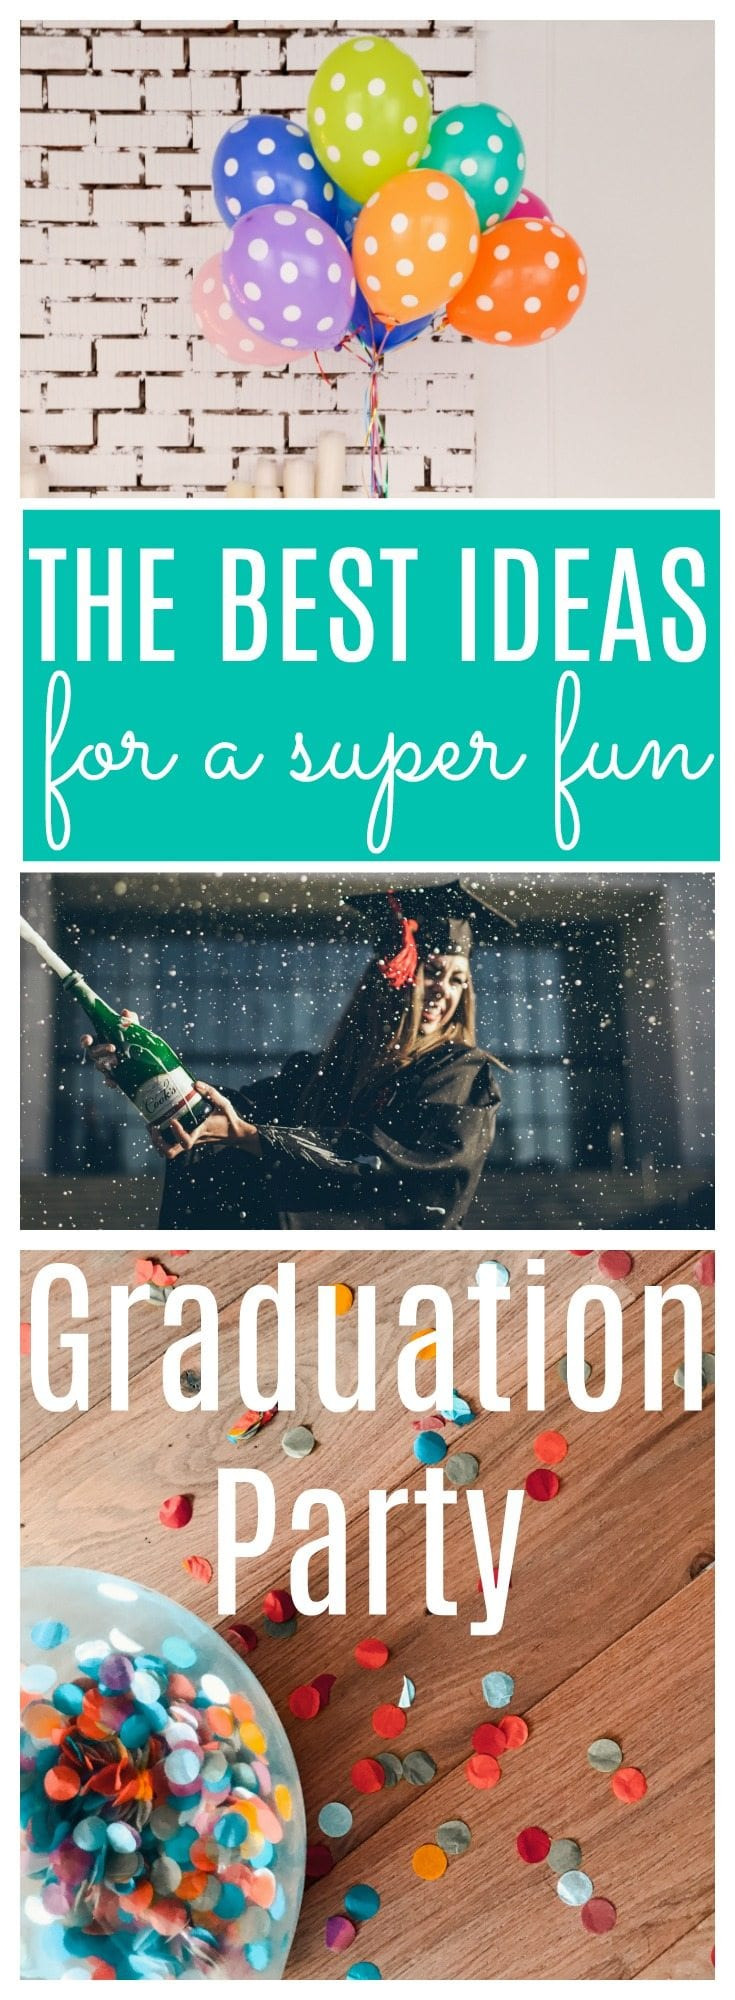 College Graduation Party Venue Ideas
 Graduation Party Ideas How to Celebrate Your Senior s Big Day